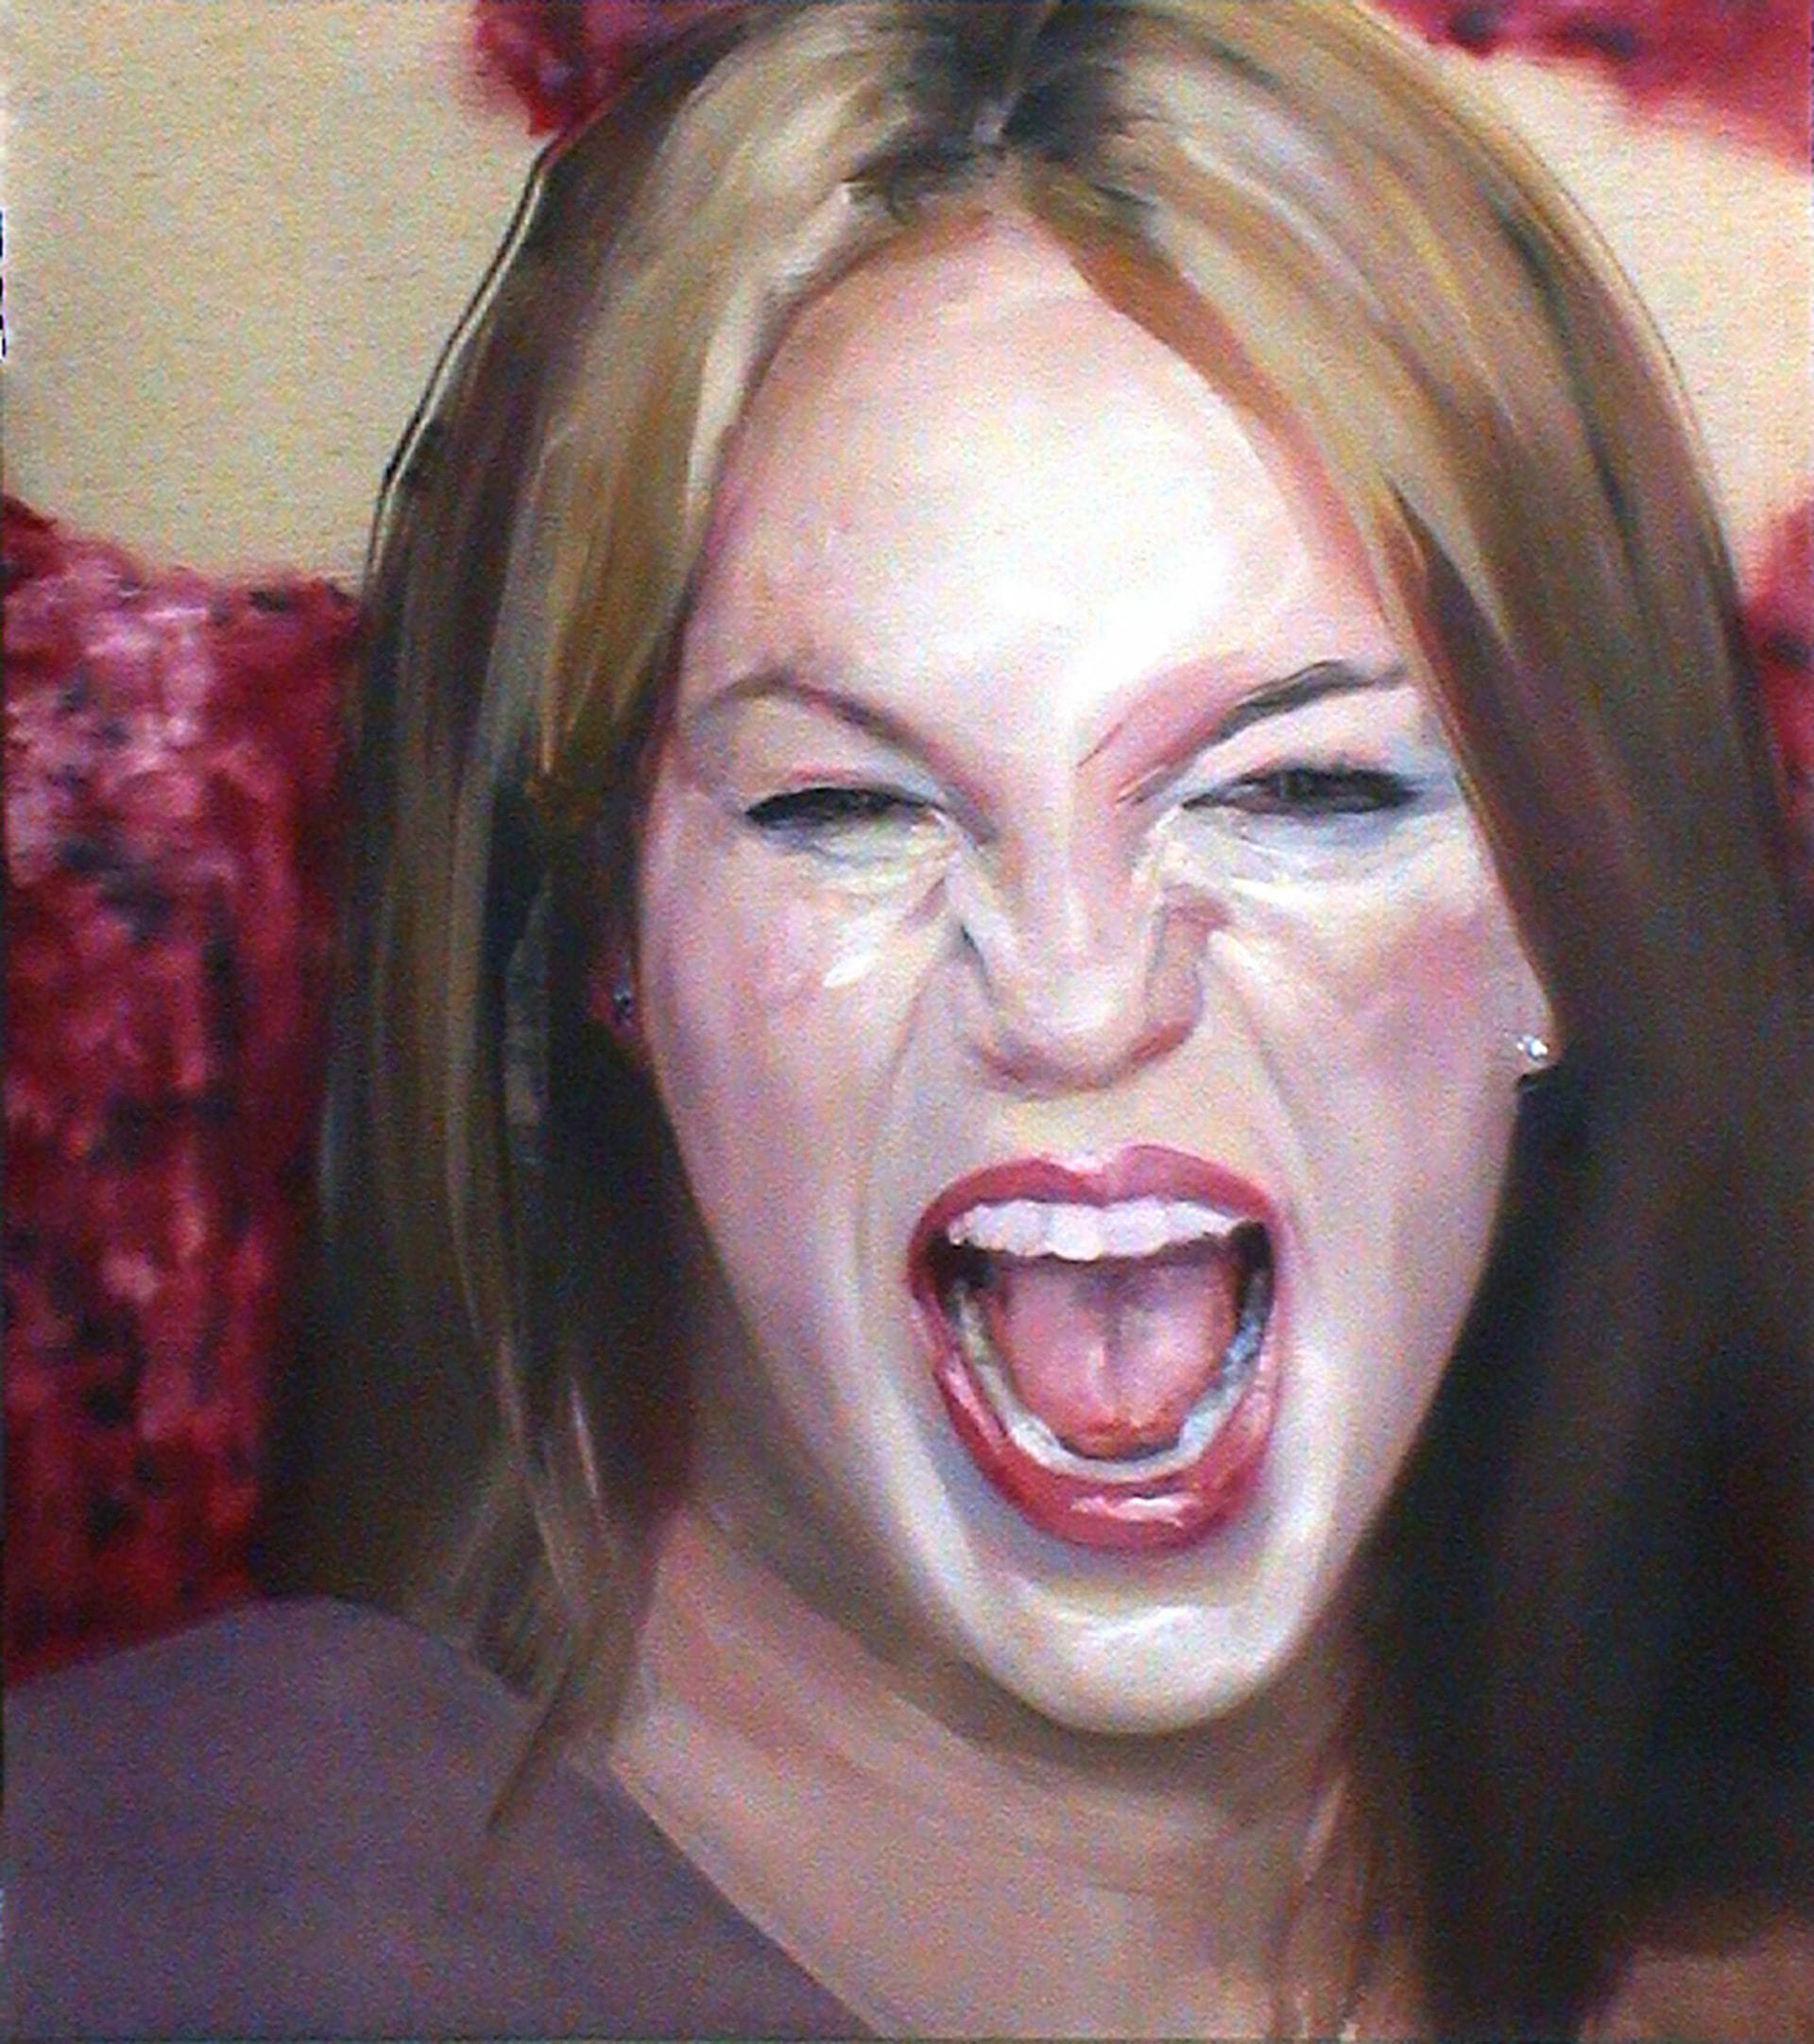 britney's scream - oil on canvas - 2000- 90 x 80 cm